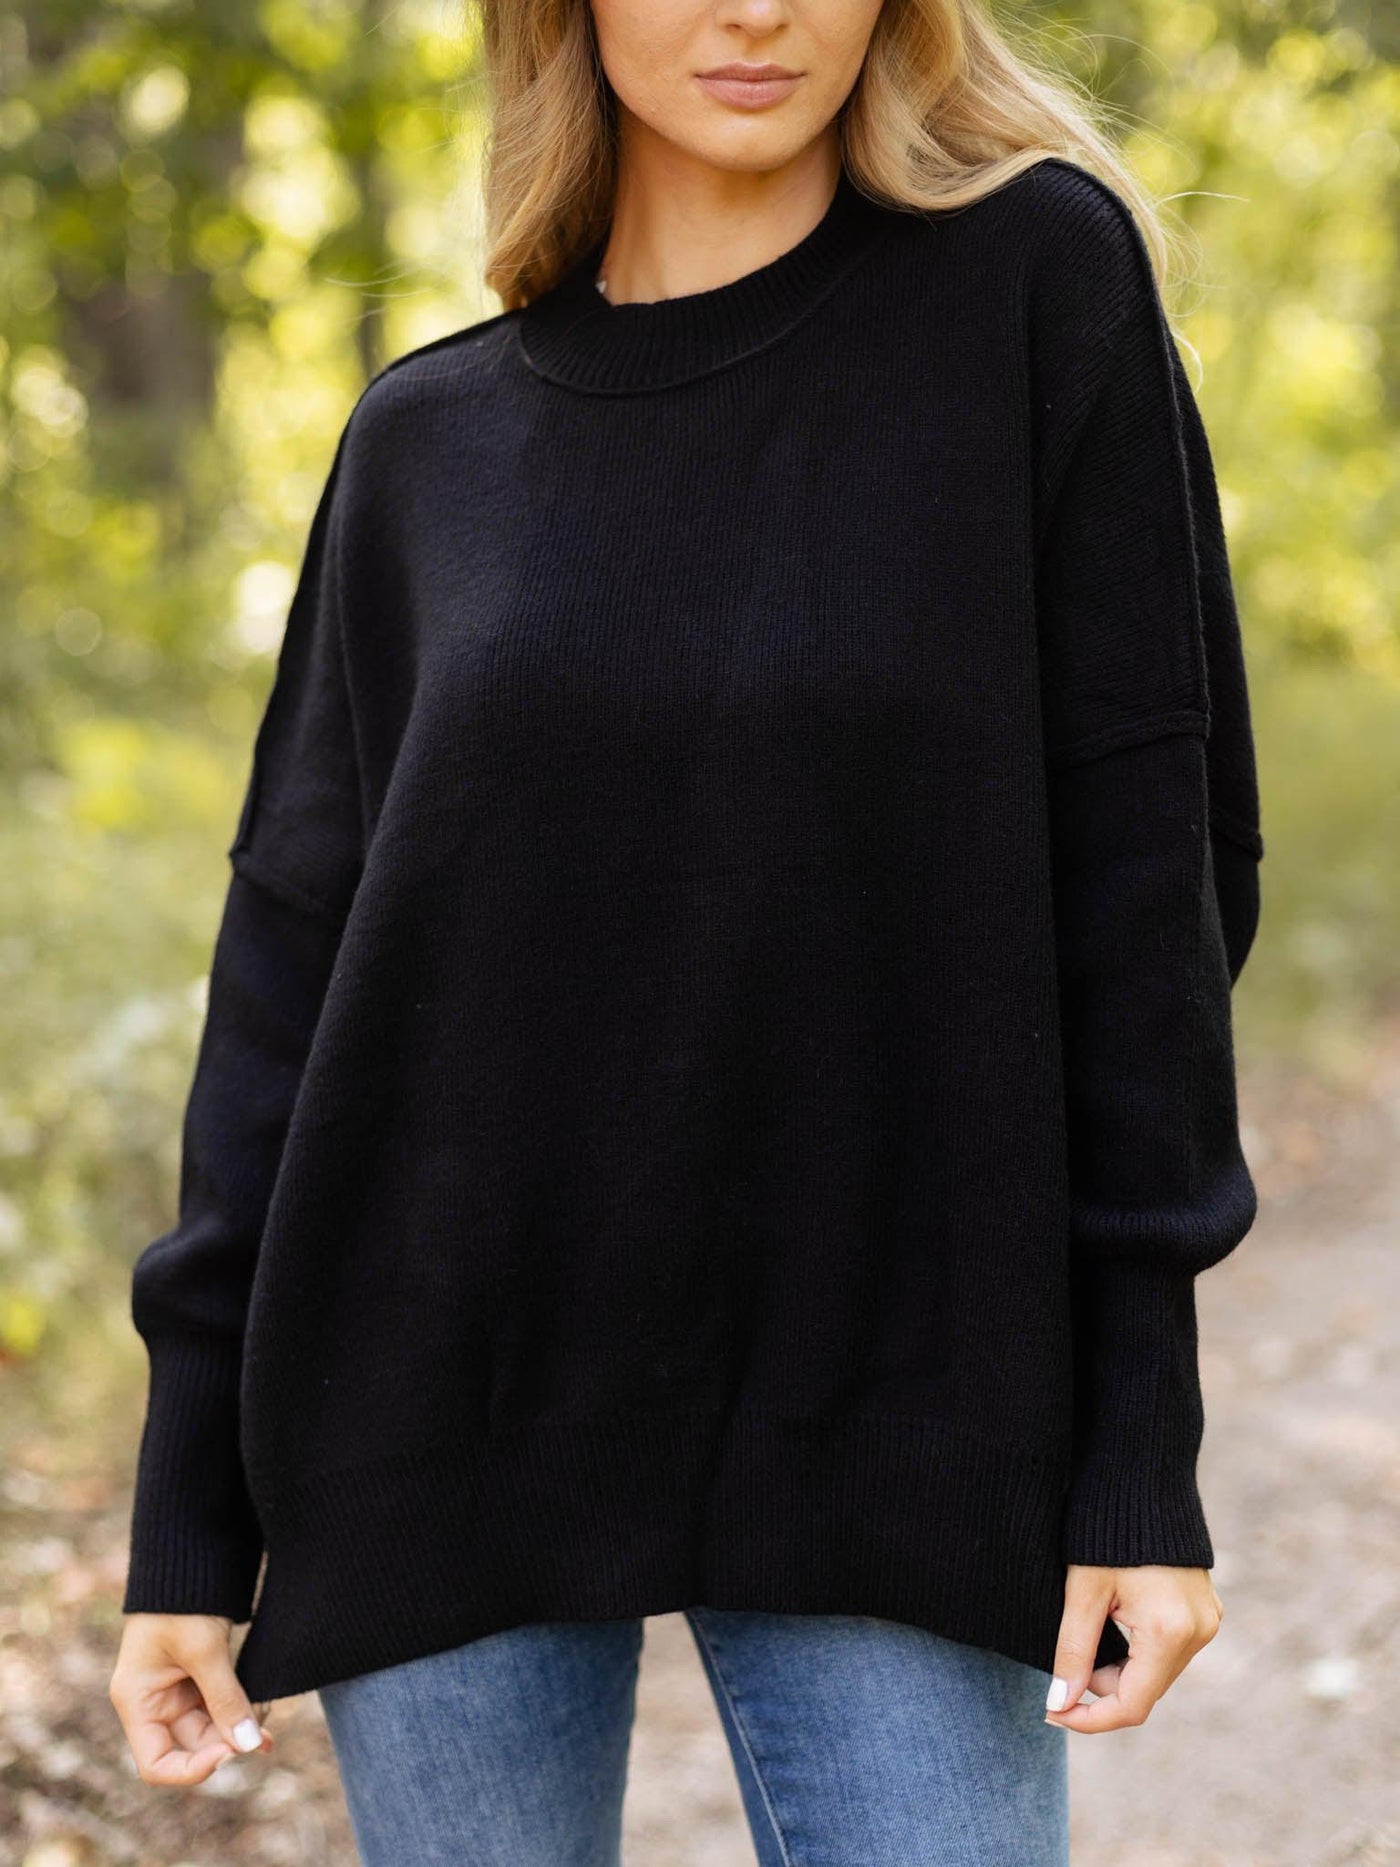 black sweater